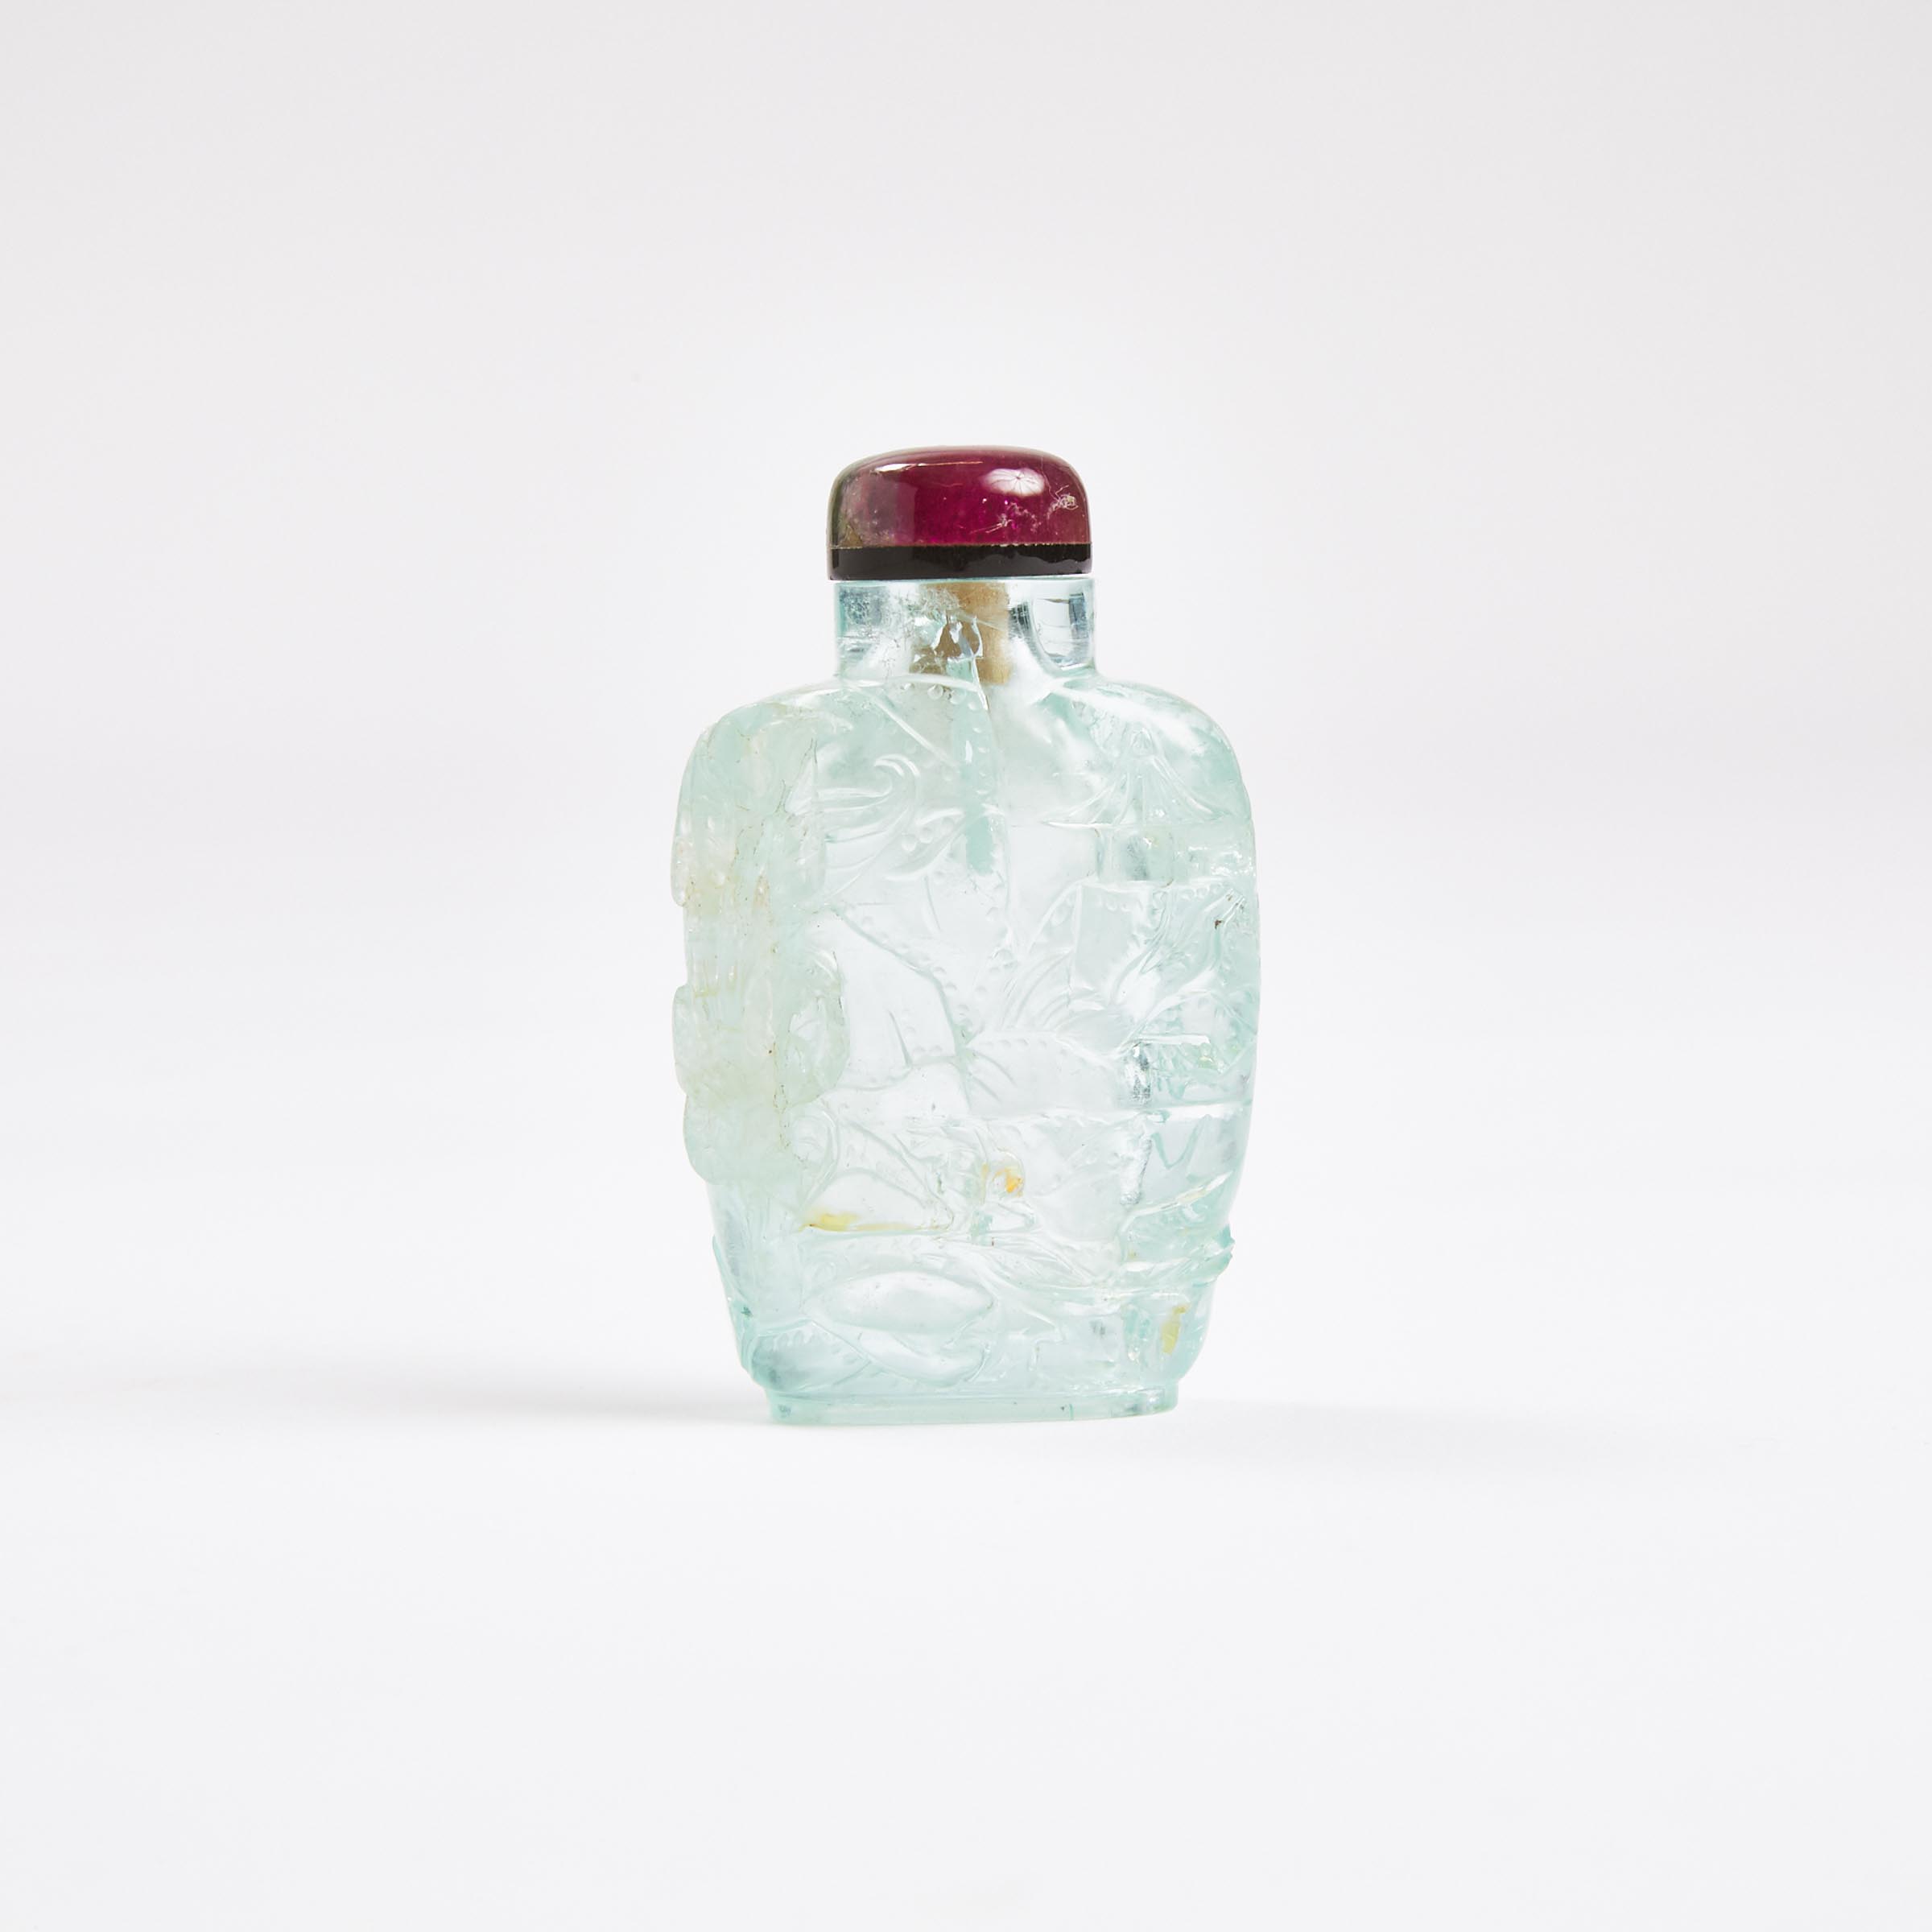 An Aquamarine Snuff Bottle, 18th/19th Century